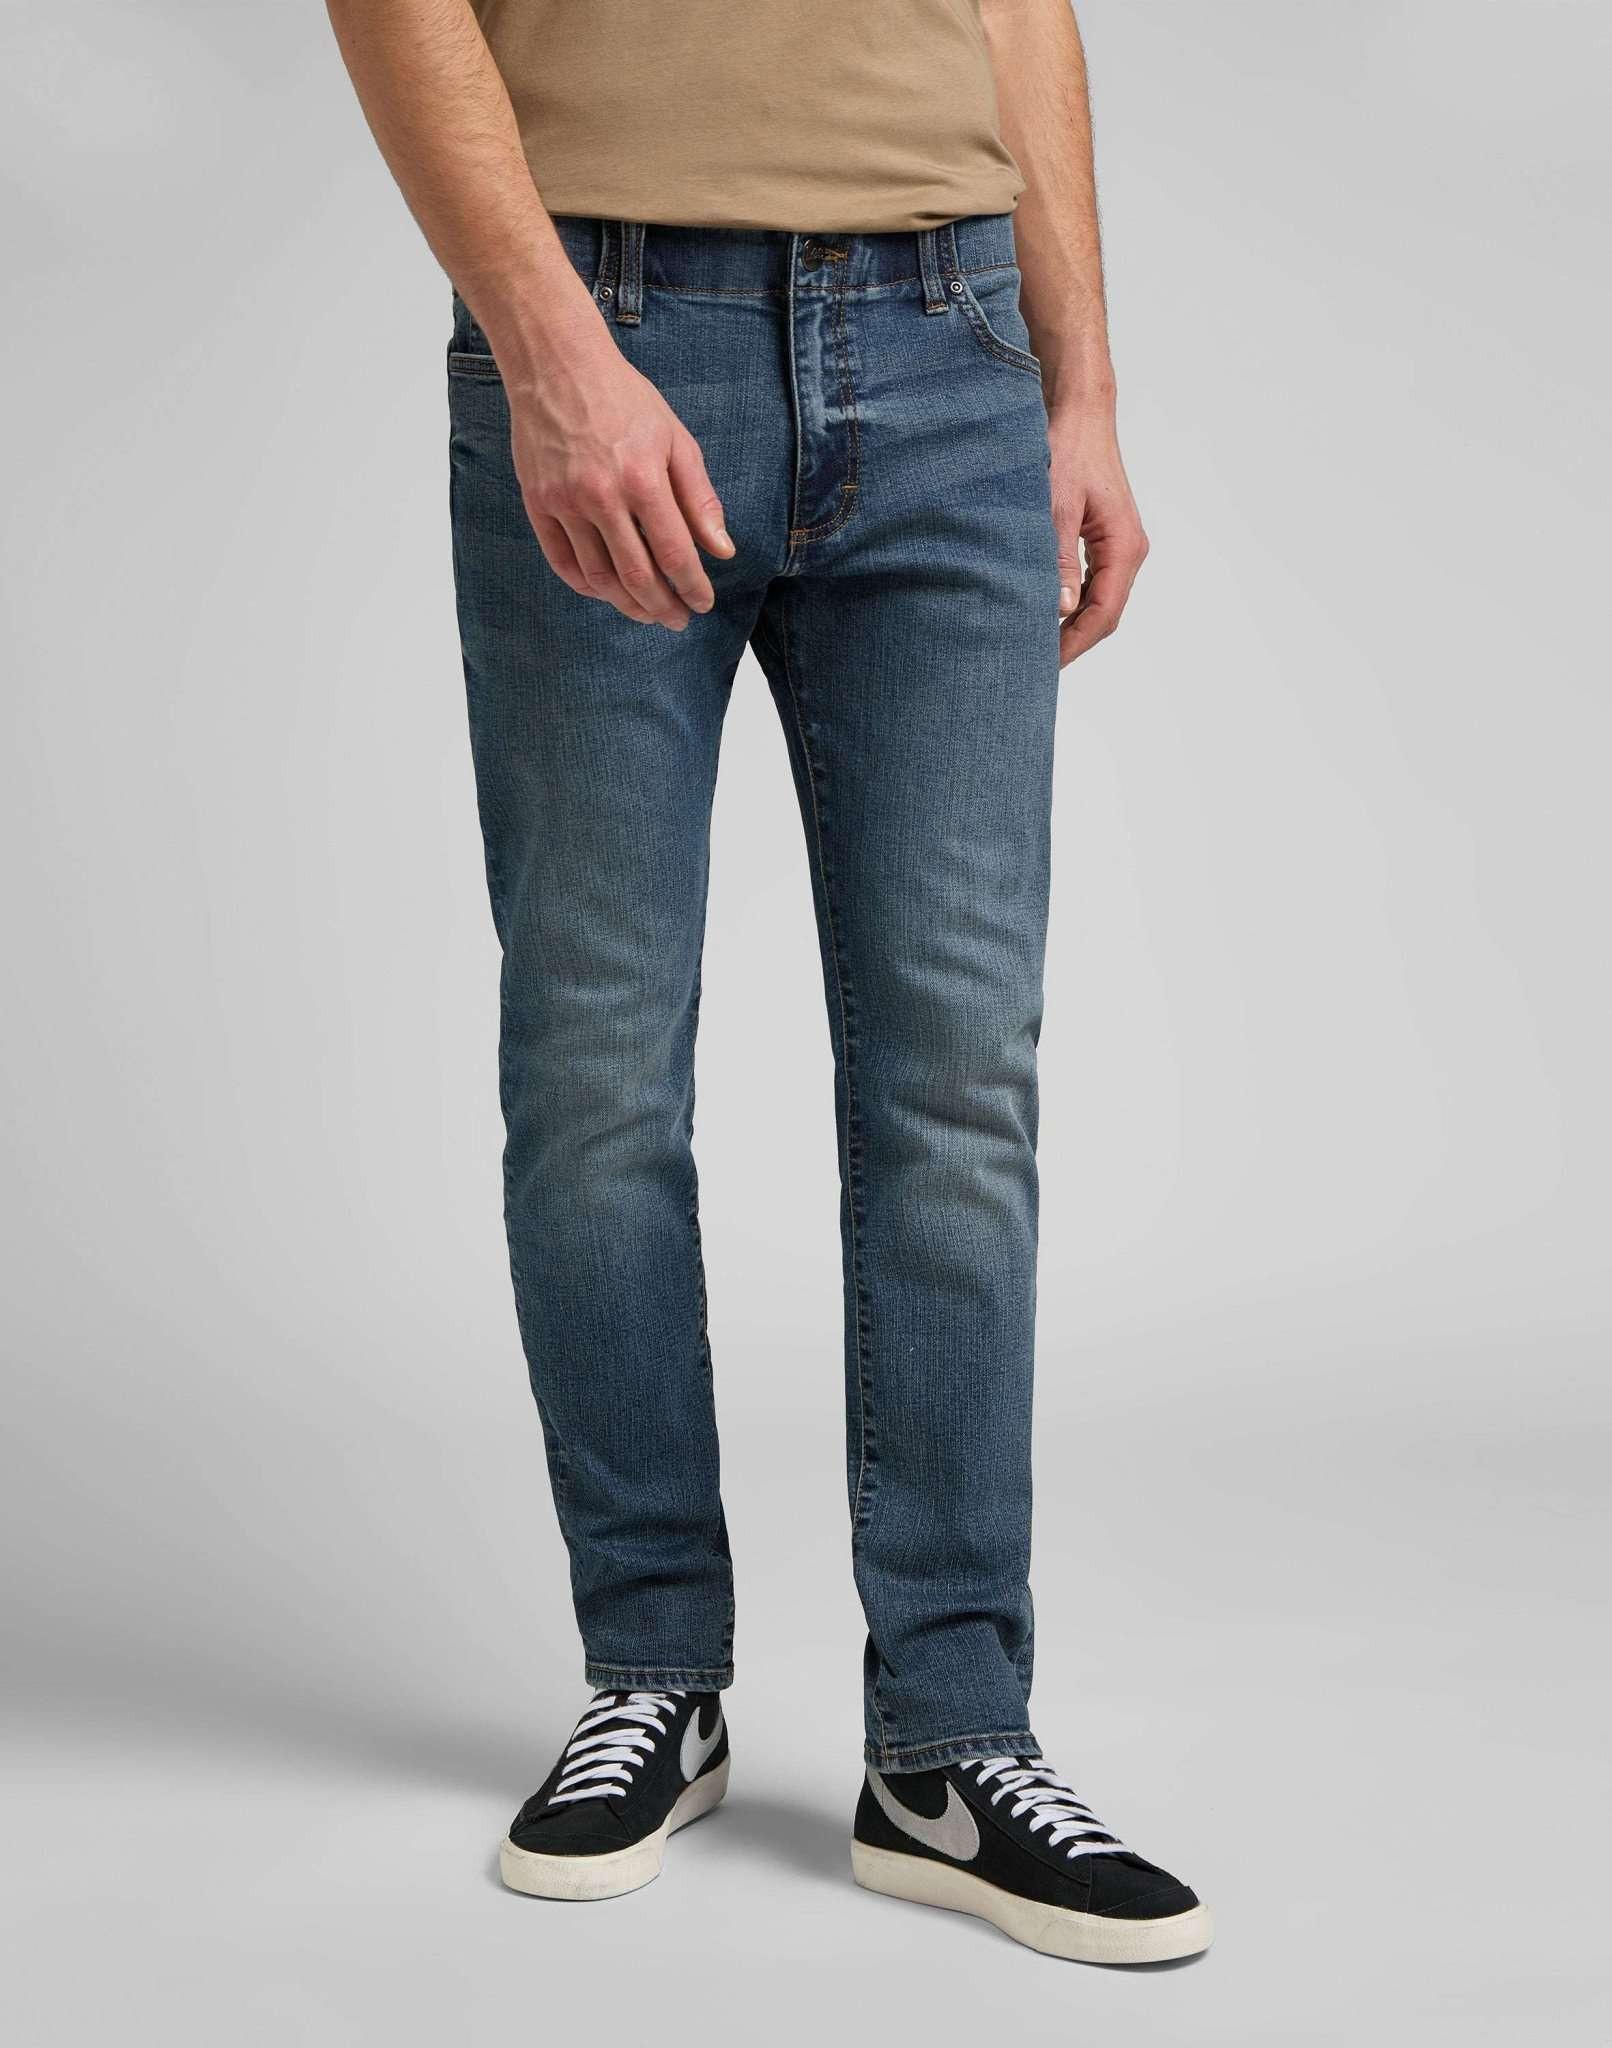 Jeans Skinny Fit Xm Herren Blau Denim L30/W38 von Lee